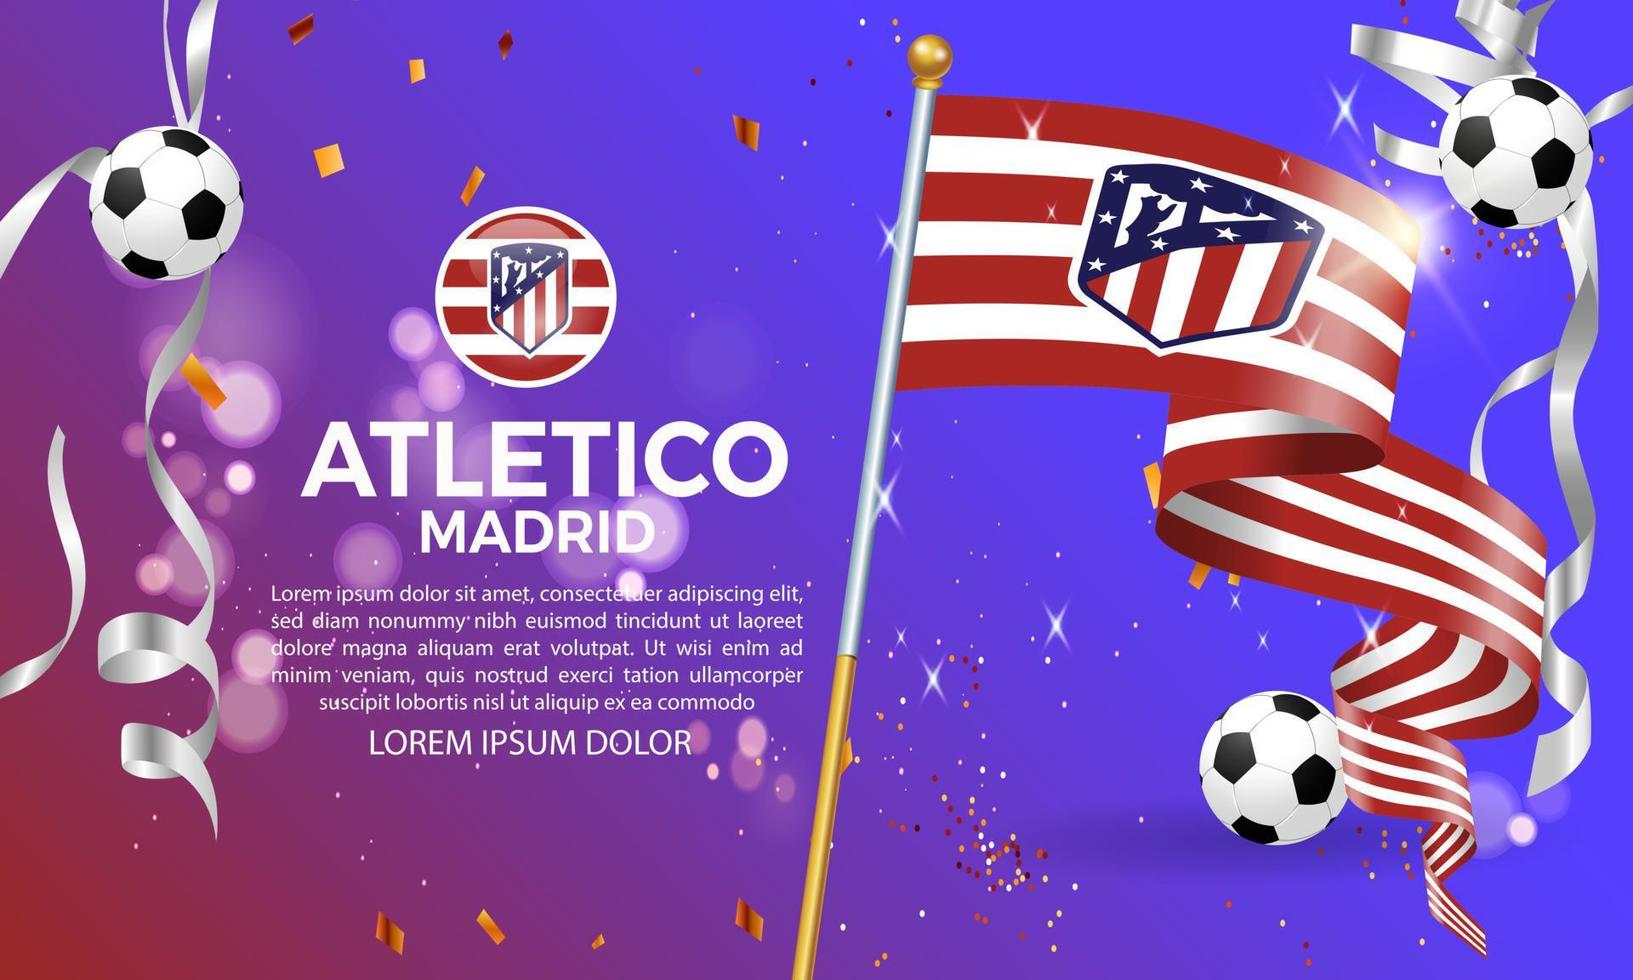 Atletico madrid football team flag. design poster illustration vector